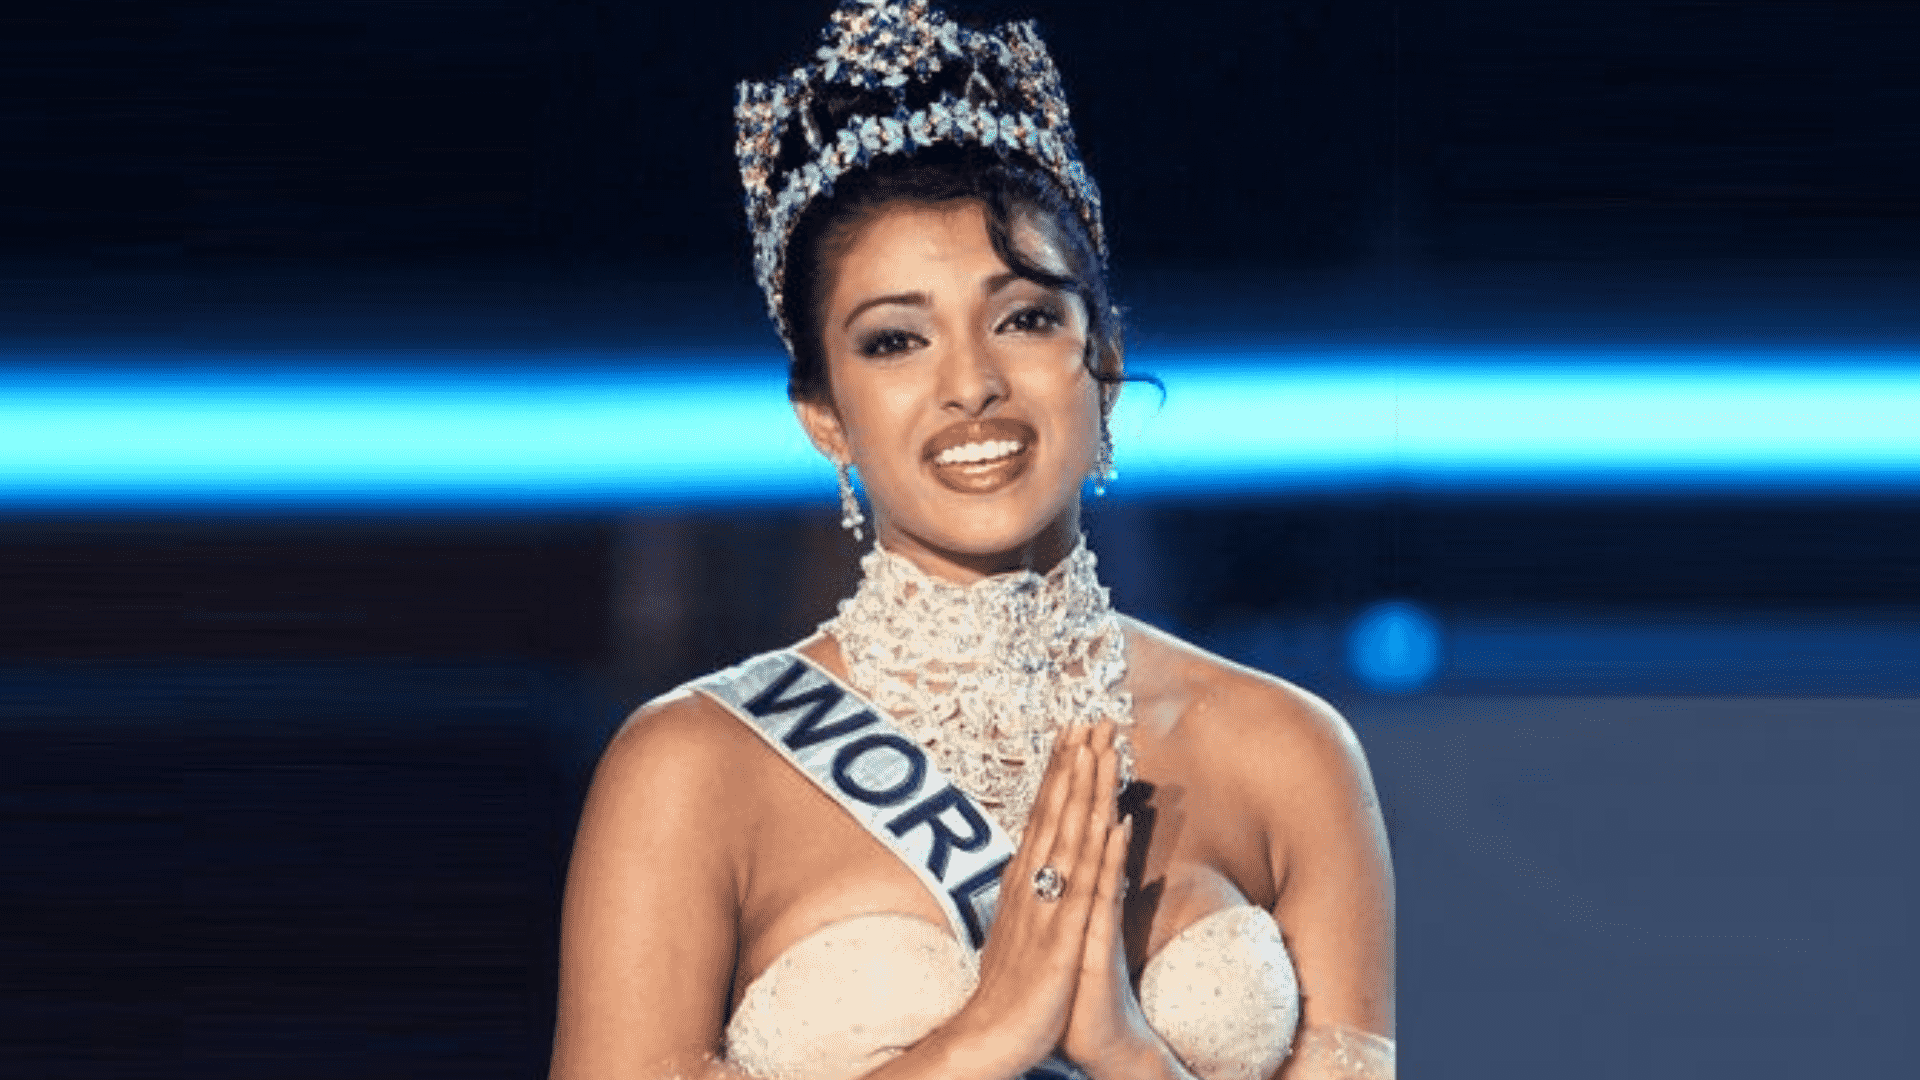 Priyanka Chopra says she kept newspaper clippings of Aishwarya Rai, Sushmita Sen winning Miss World and Miss Universe